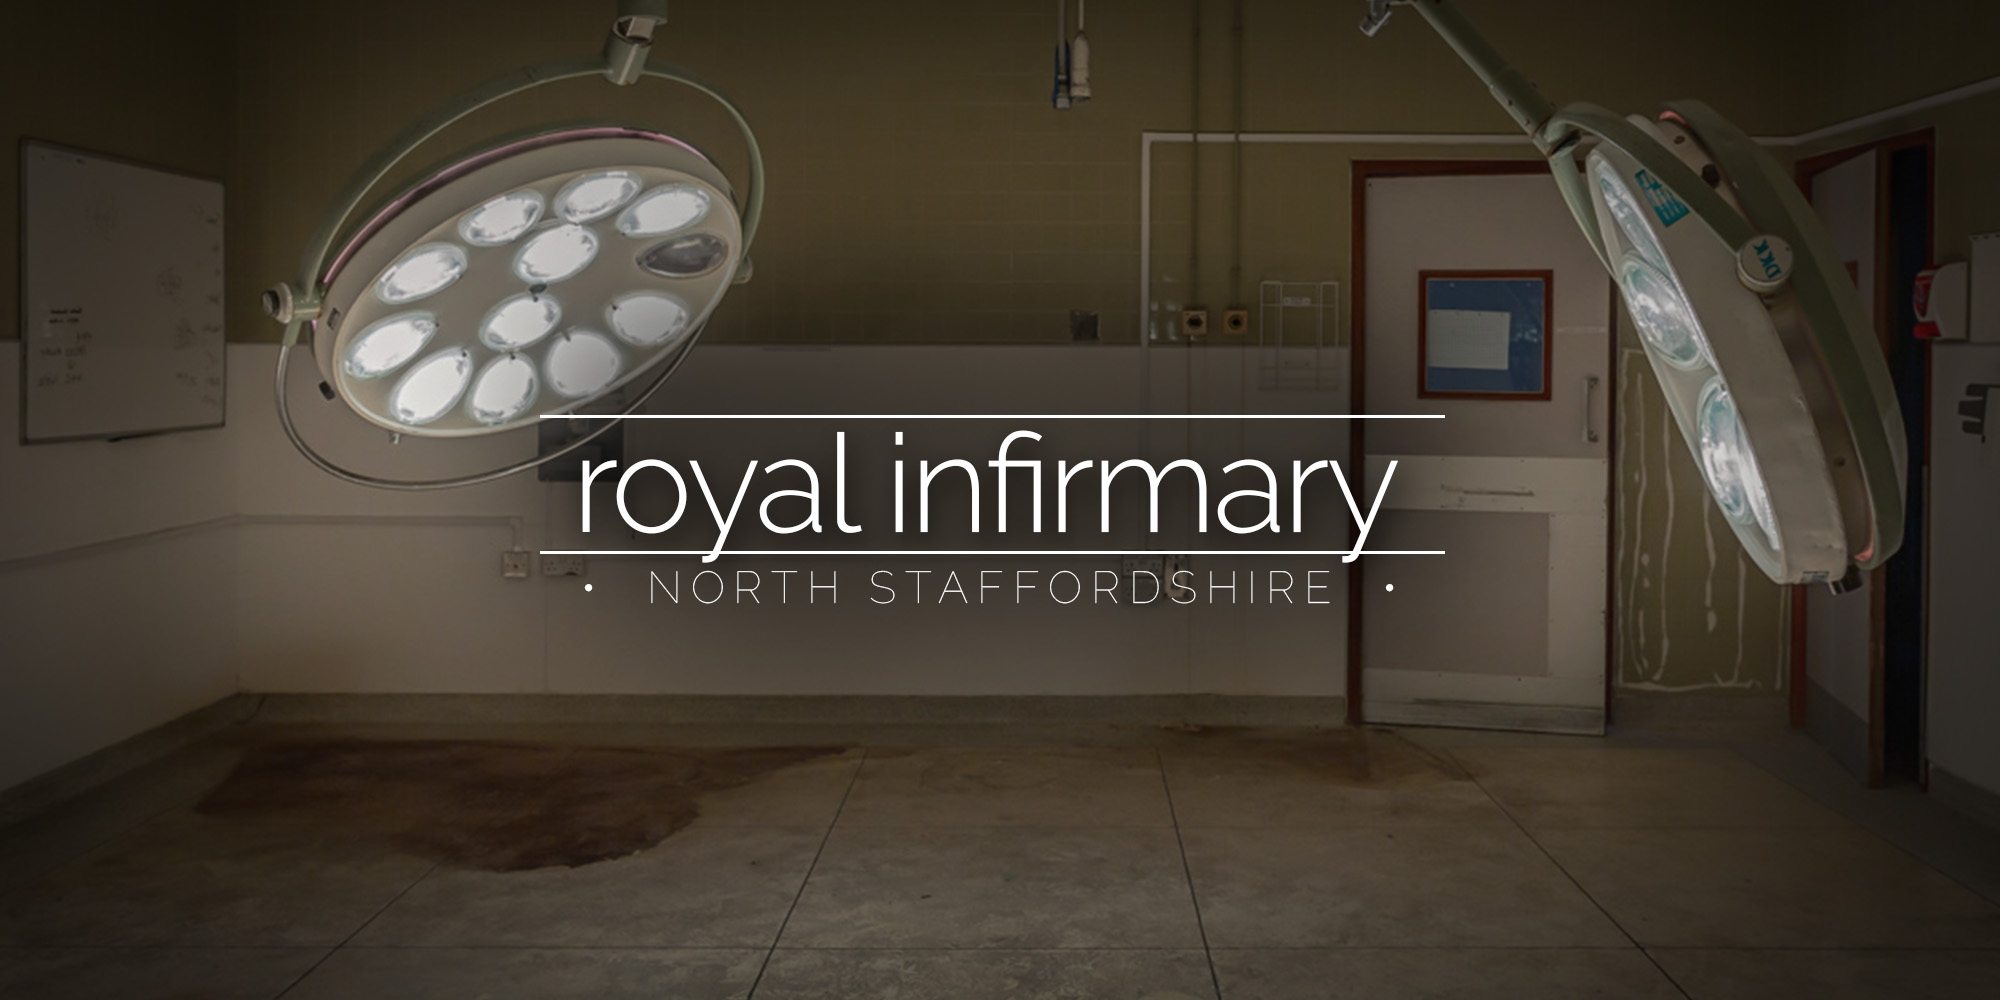 North Staffordshire Royal Infirmary, Hartshill, Stoke-on-Trent